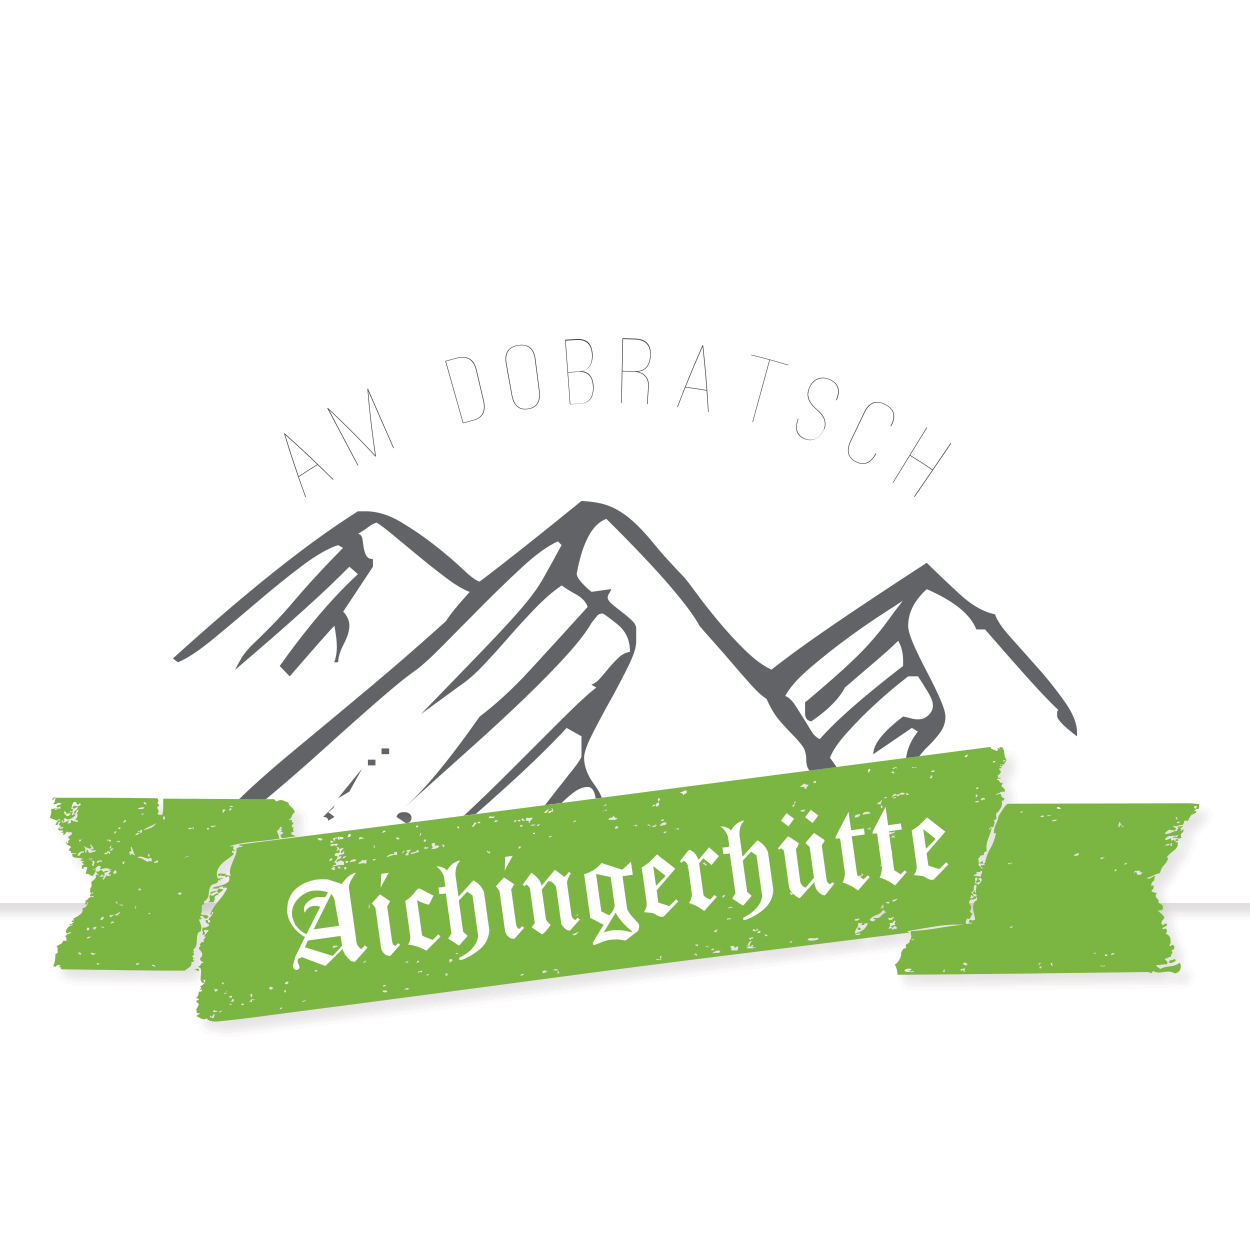 (c) Aichingerhuette-dobratsch.at